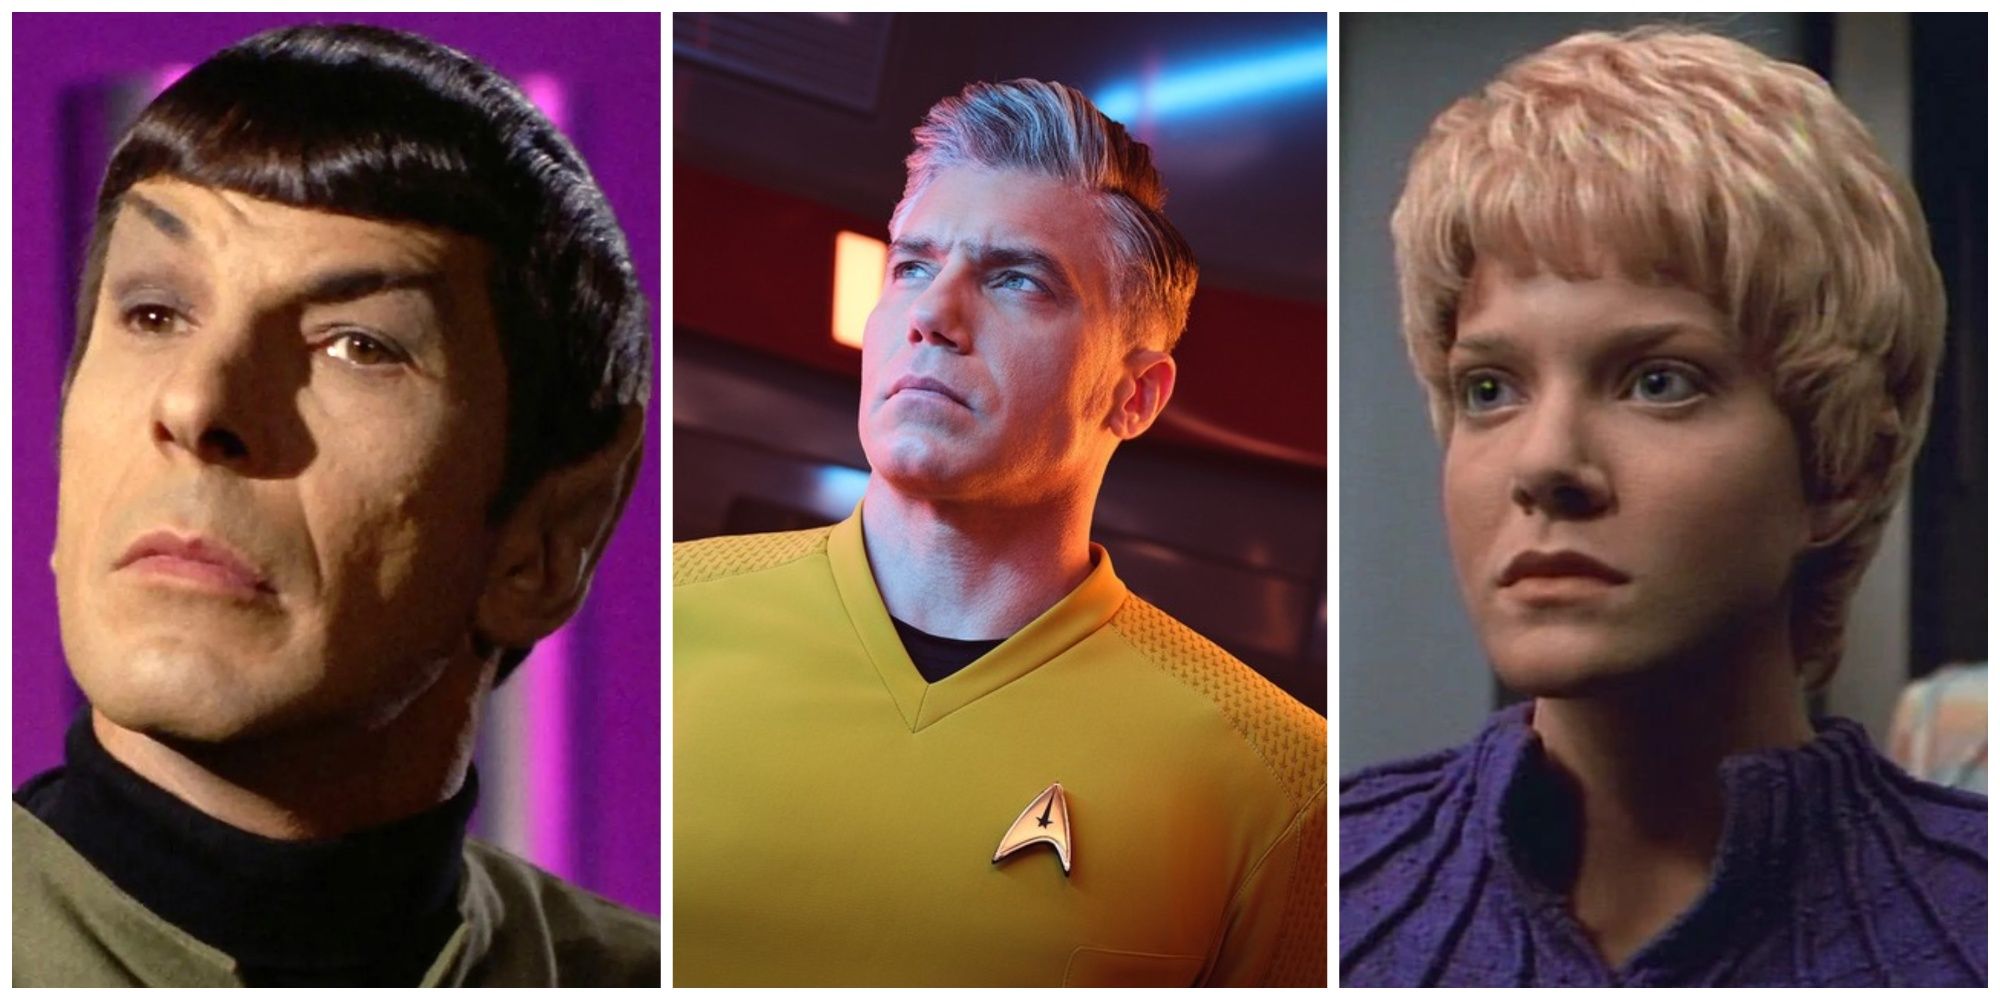 Split image showing Star Trek's Spock, Pike, and Kes.